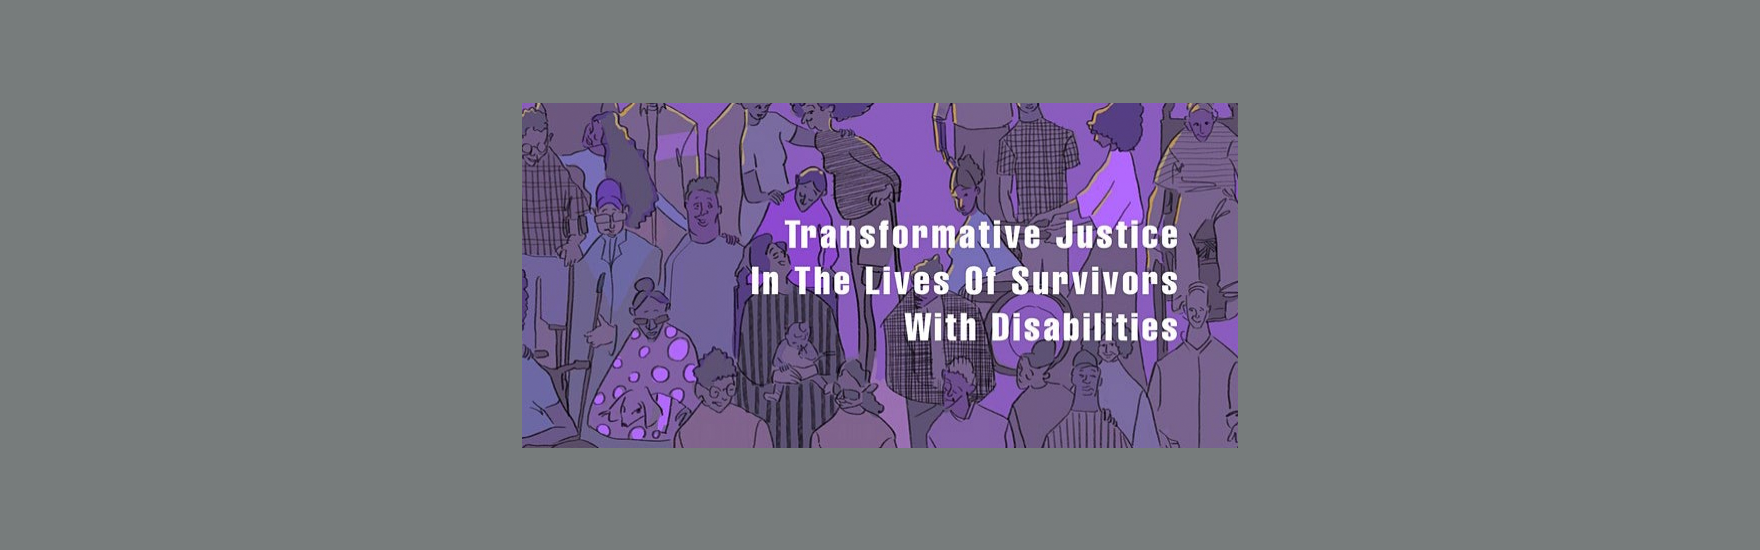 Transformative-Justice-recap-post-featured-image